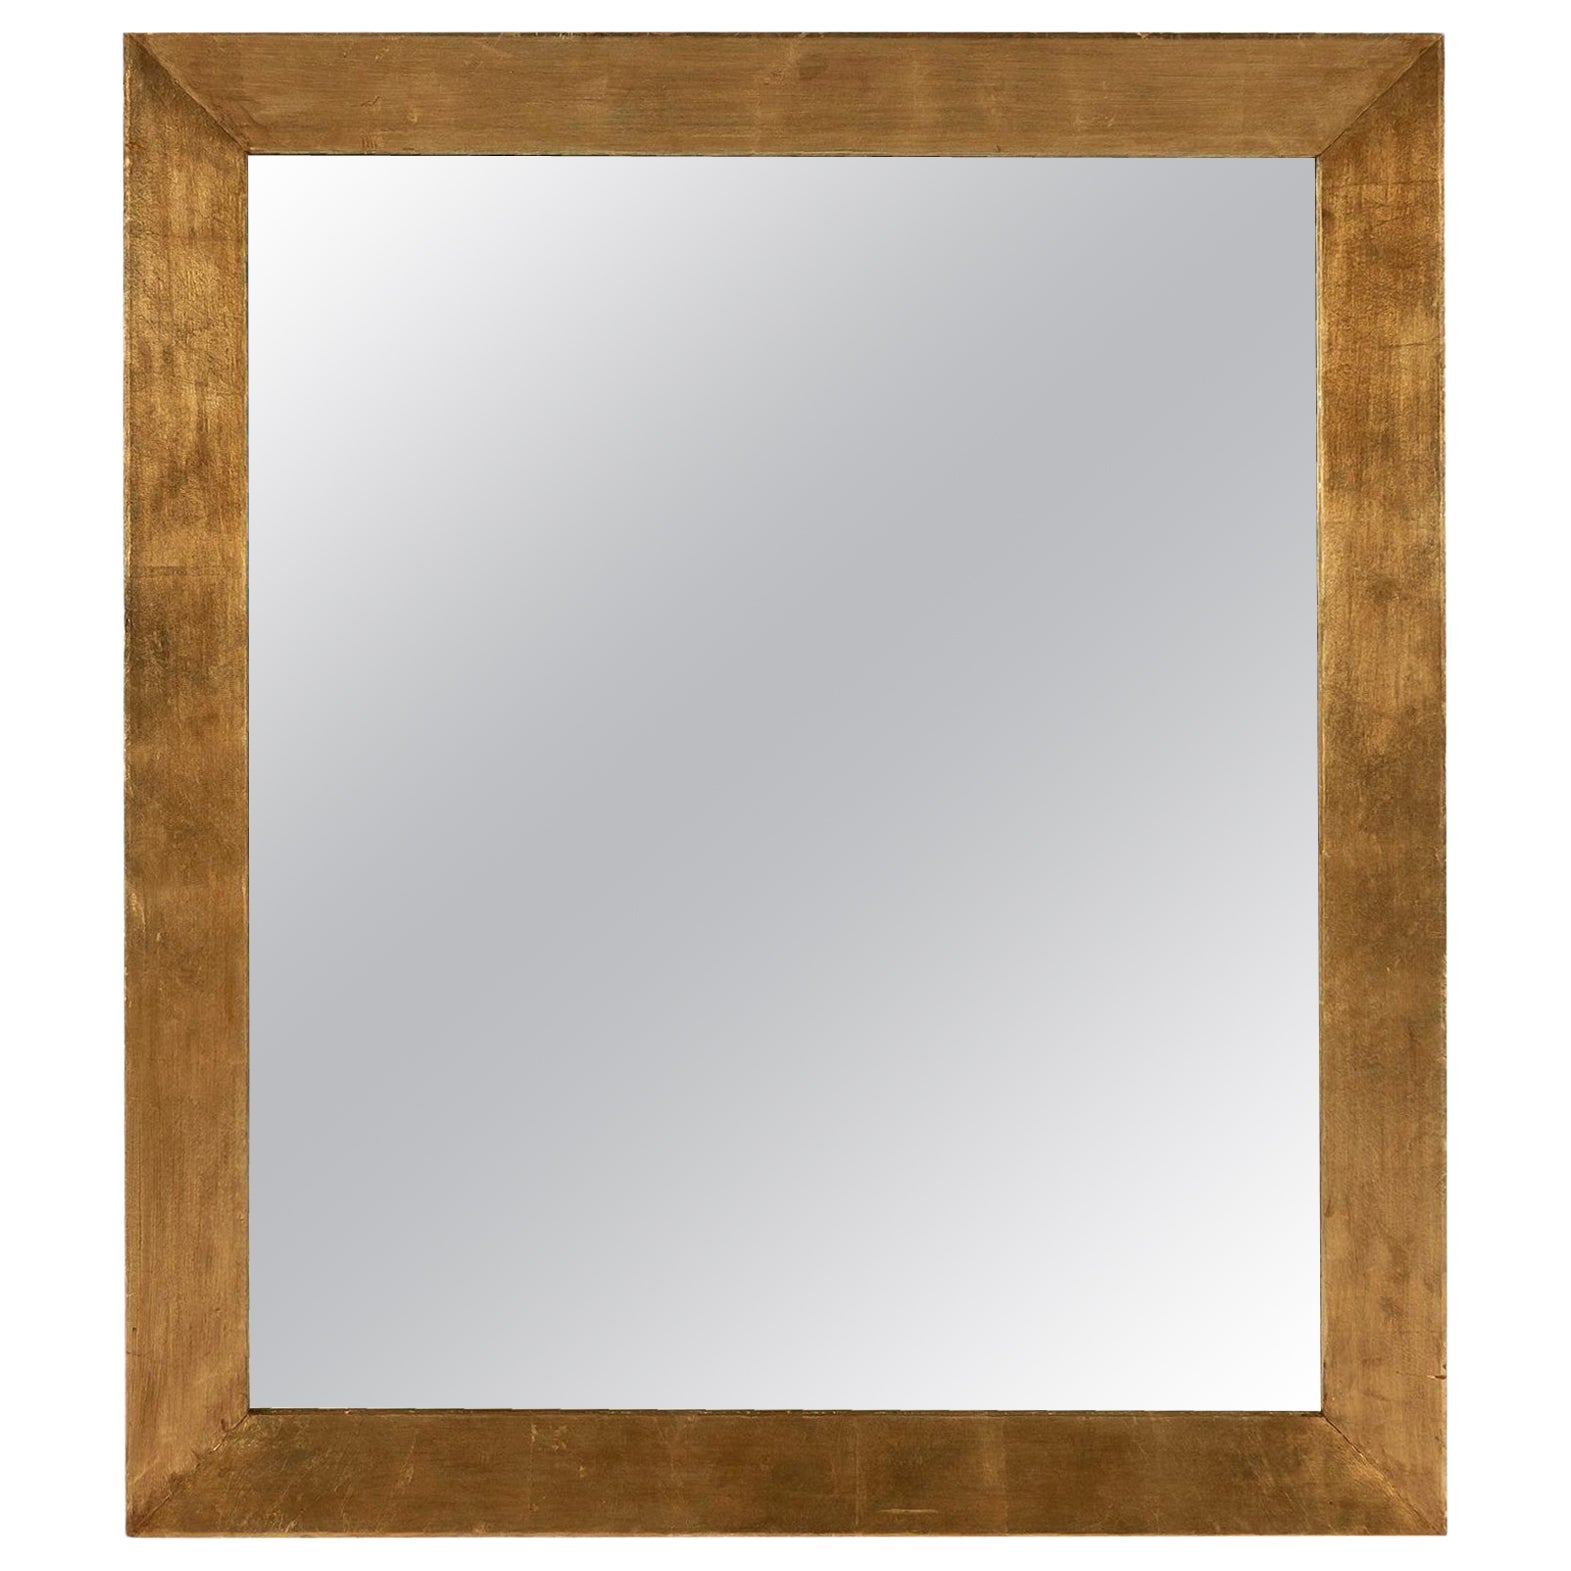 Contemporary Giltwood Mirror